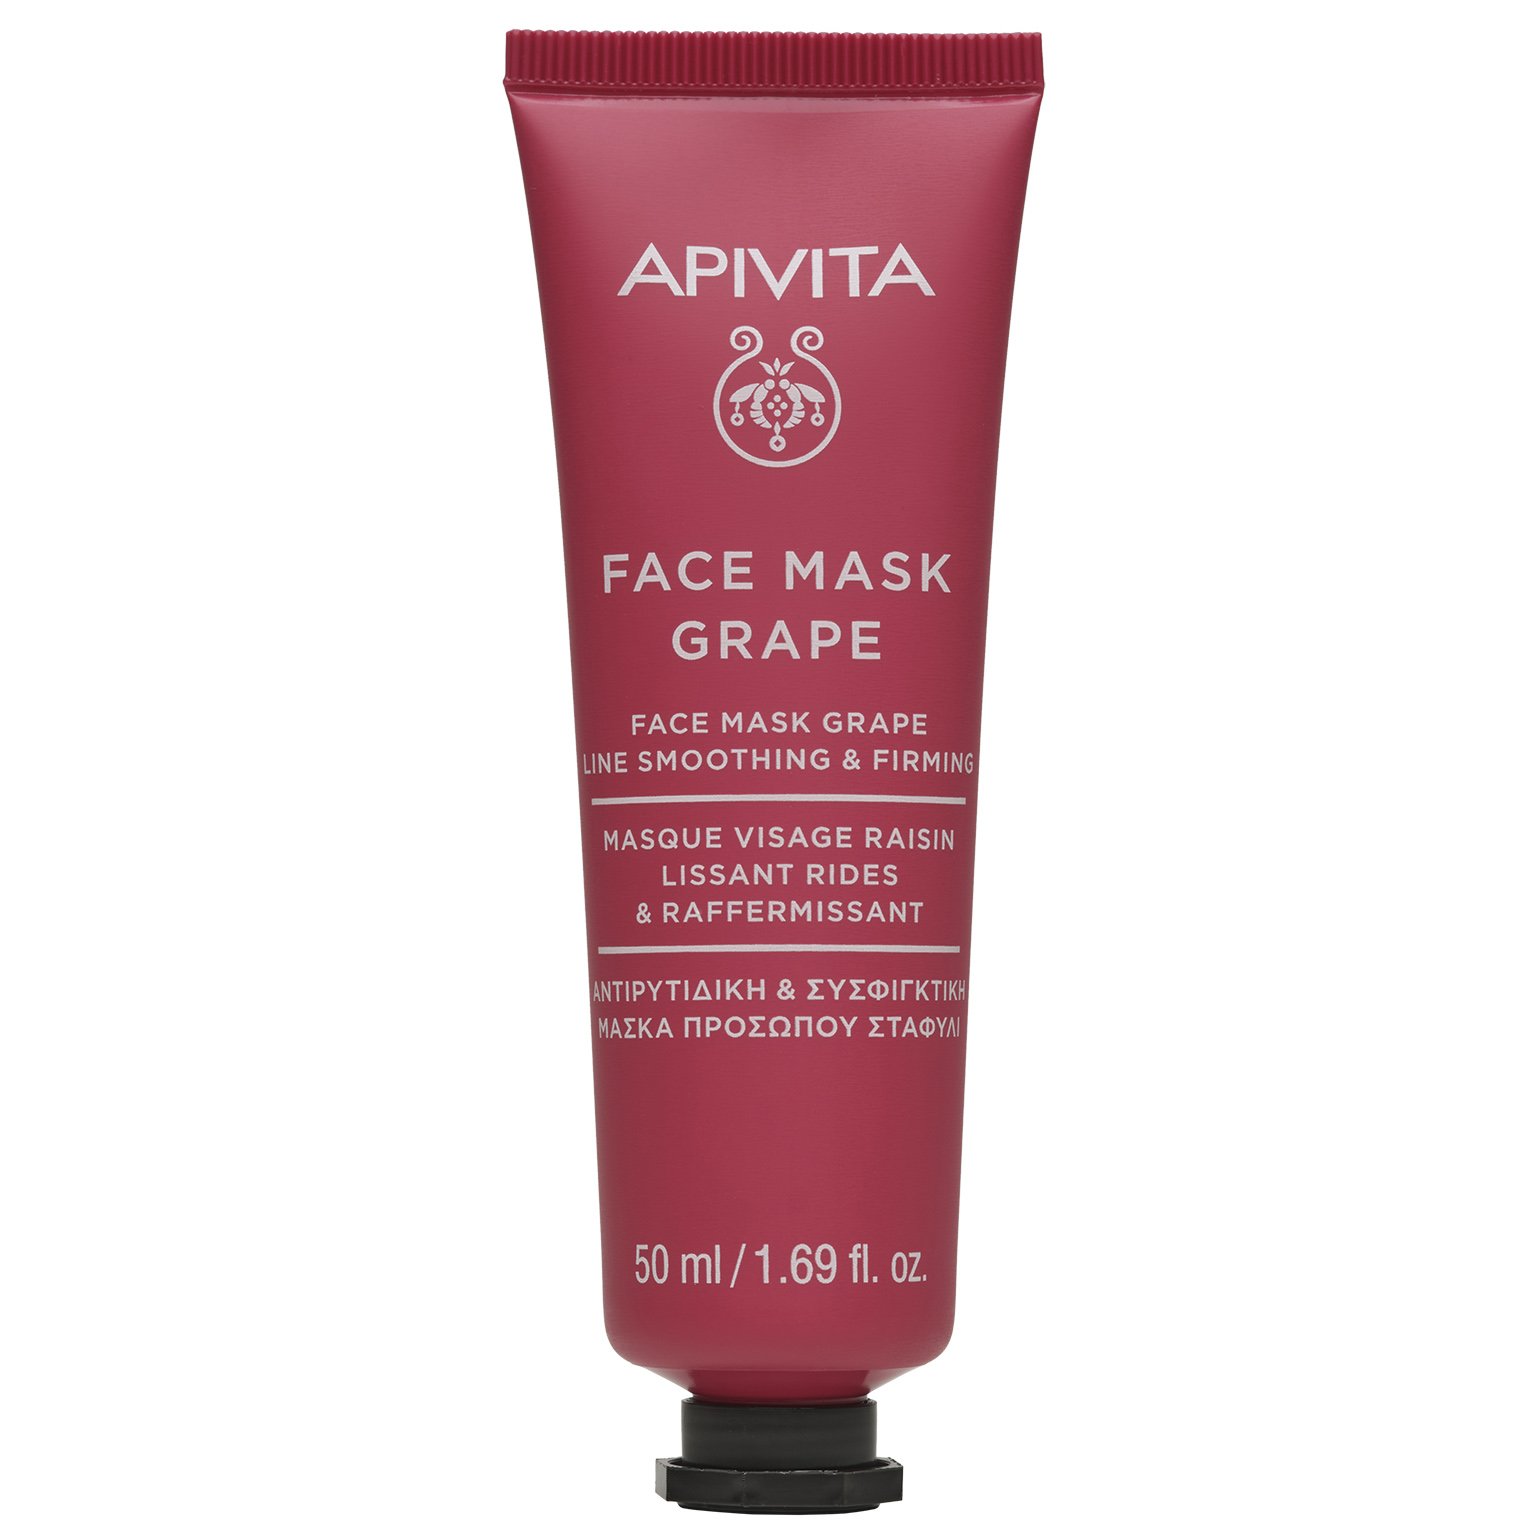 Apivita Face Mask Grape Αντιρυτιδική & Συσφικτική Μάσκα Προσώπου με Σταφύλι 50ml